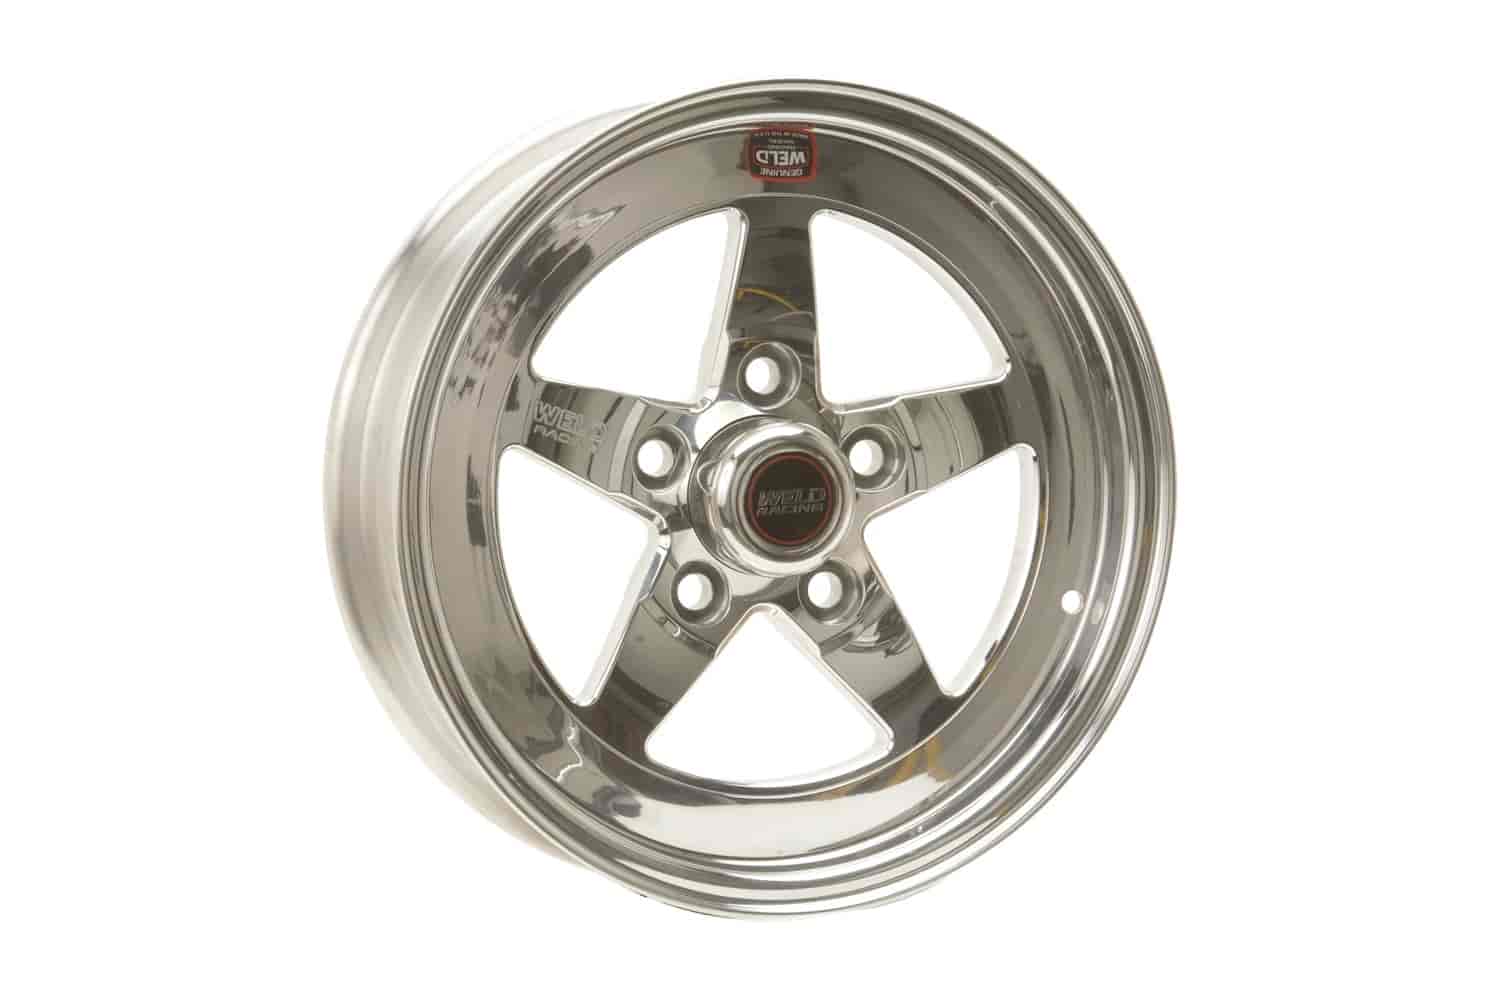 RT-S Series Wheel Size: 15" x 10" Bolt Circle: 5 x 4-1/2" Rear Spacing: 4-1/2"